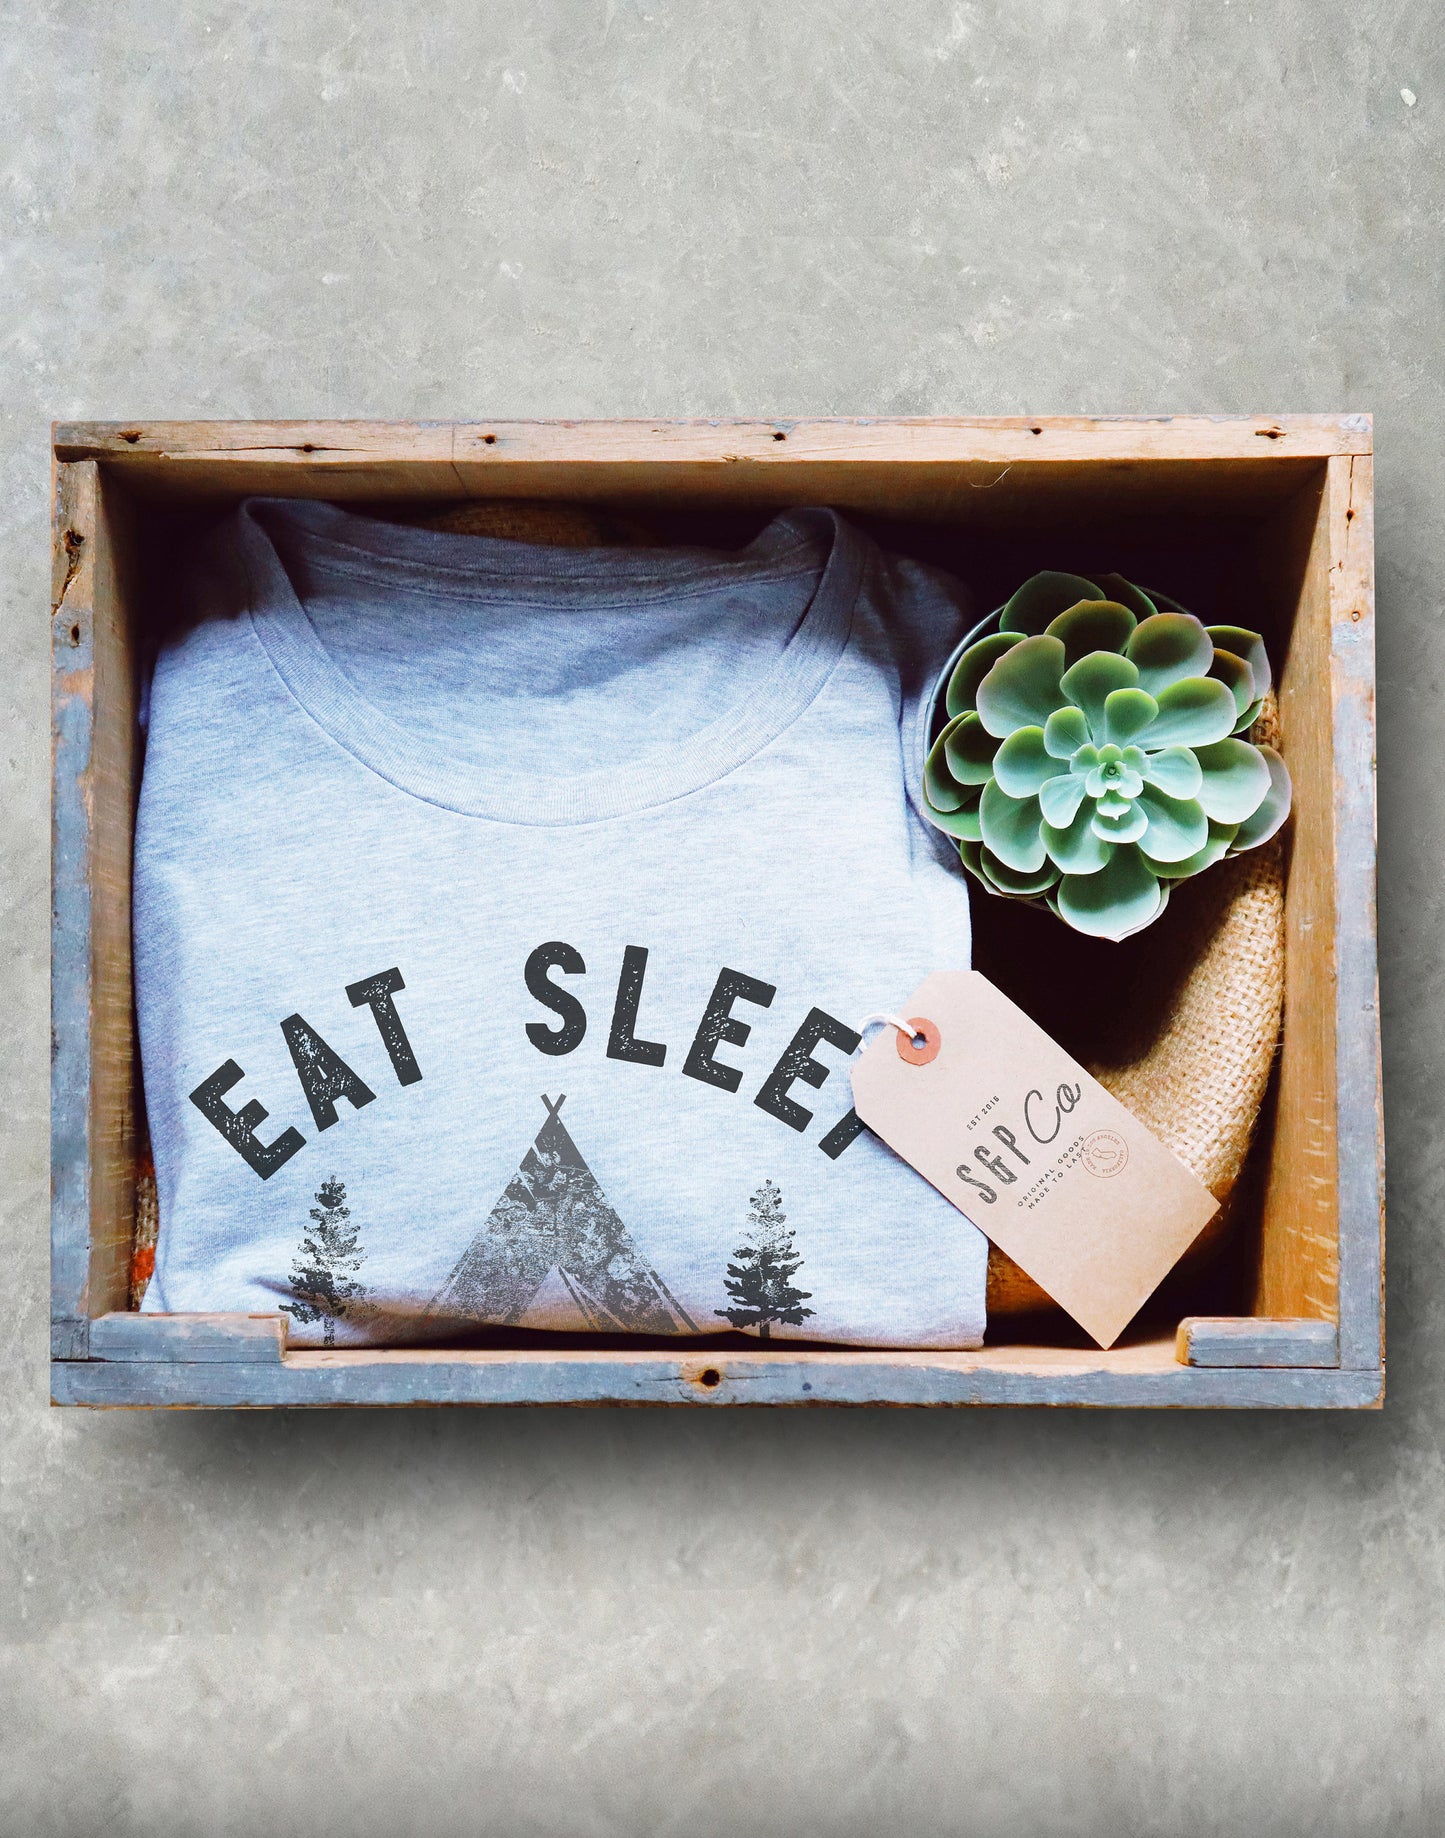 Eat Sleep Camp Repeat Unisex Shirt - Camping shirt, Happy camper shirt, Happy camper, Camping, Hiking shirt, Camping gift, Camp shirt